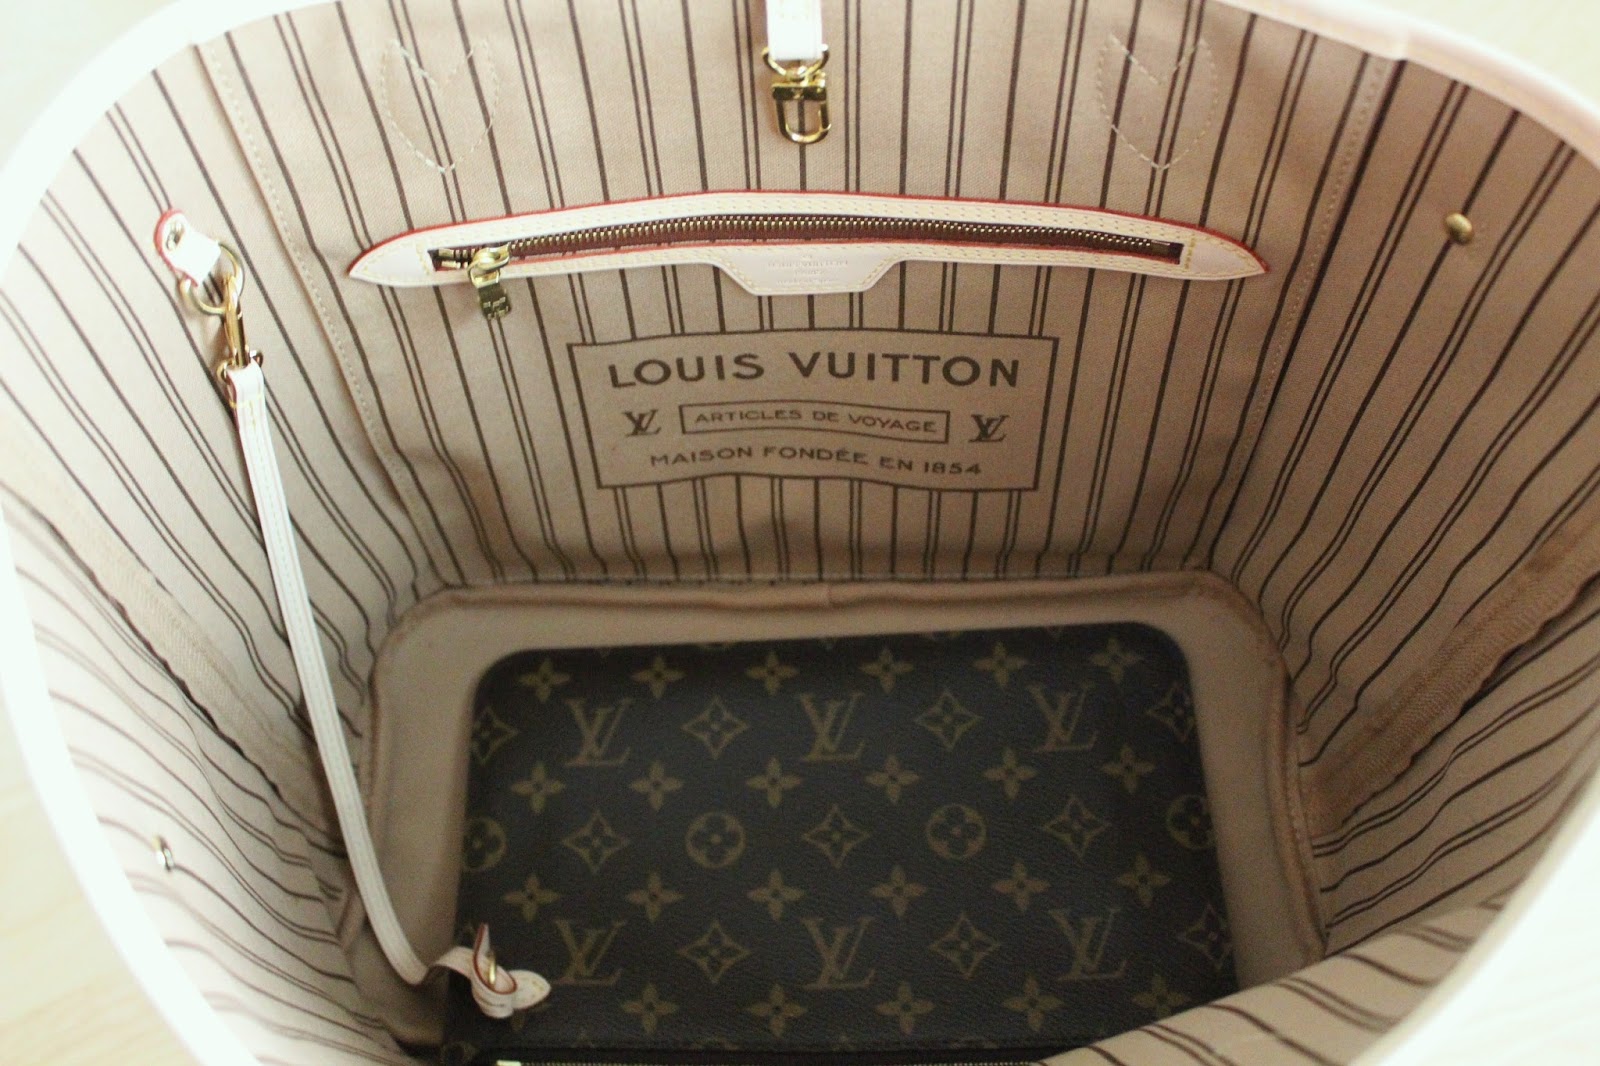 MOLIMU: MOLIMU Essentials: Louis Vuitton Groom Collection